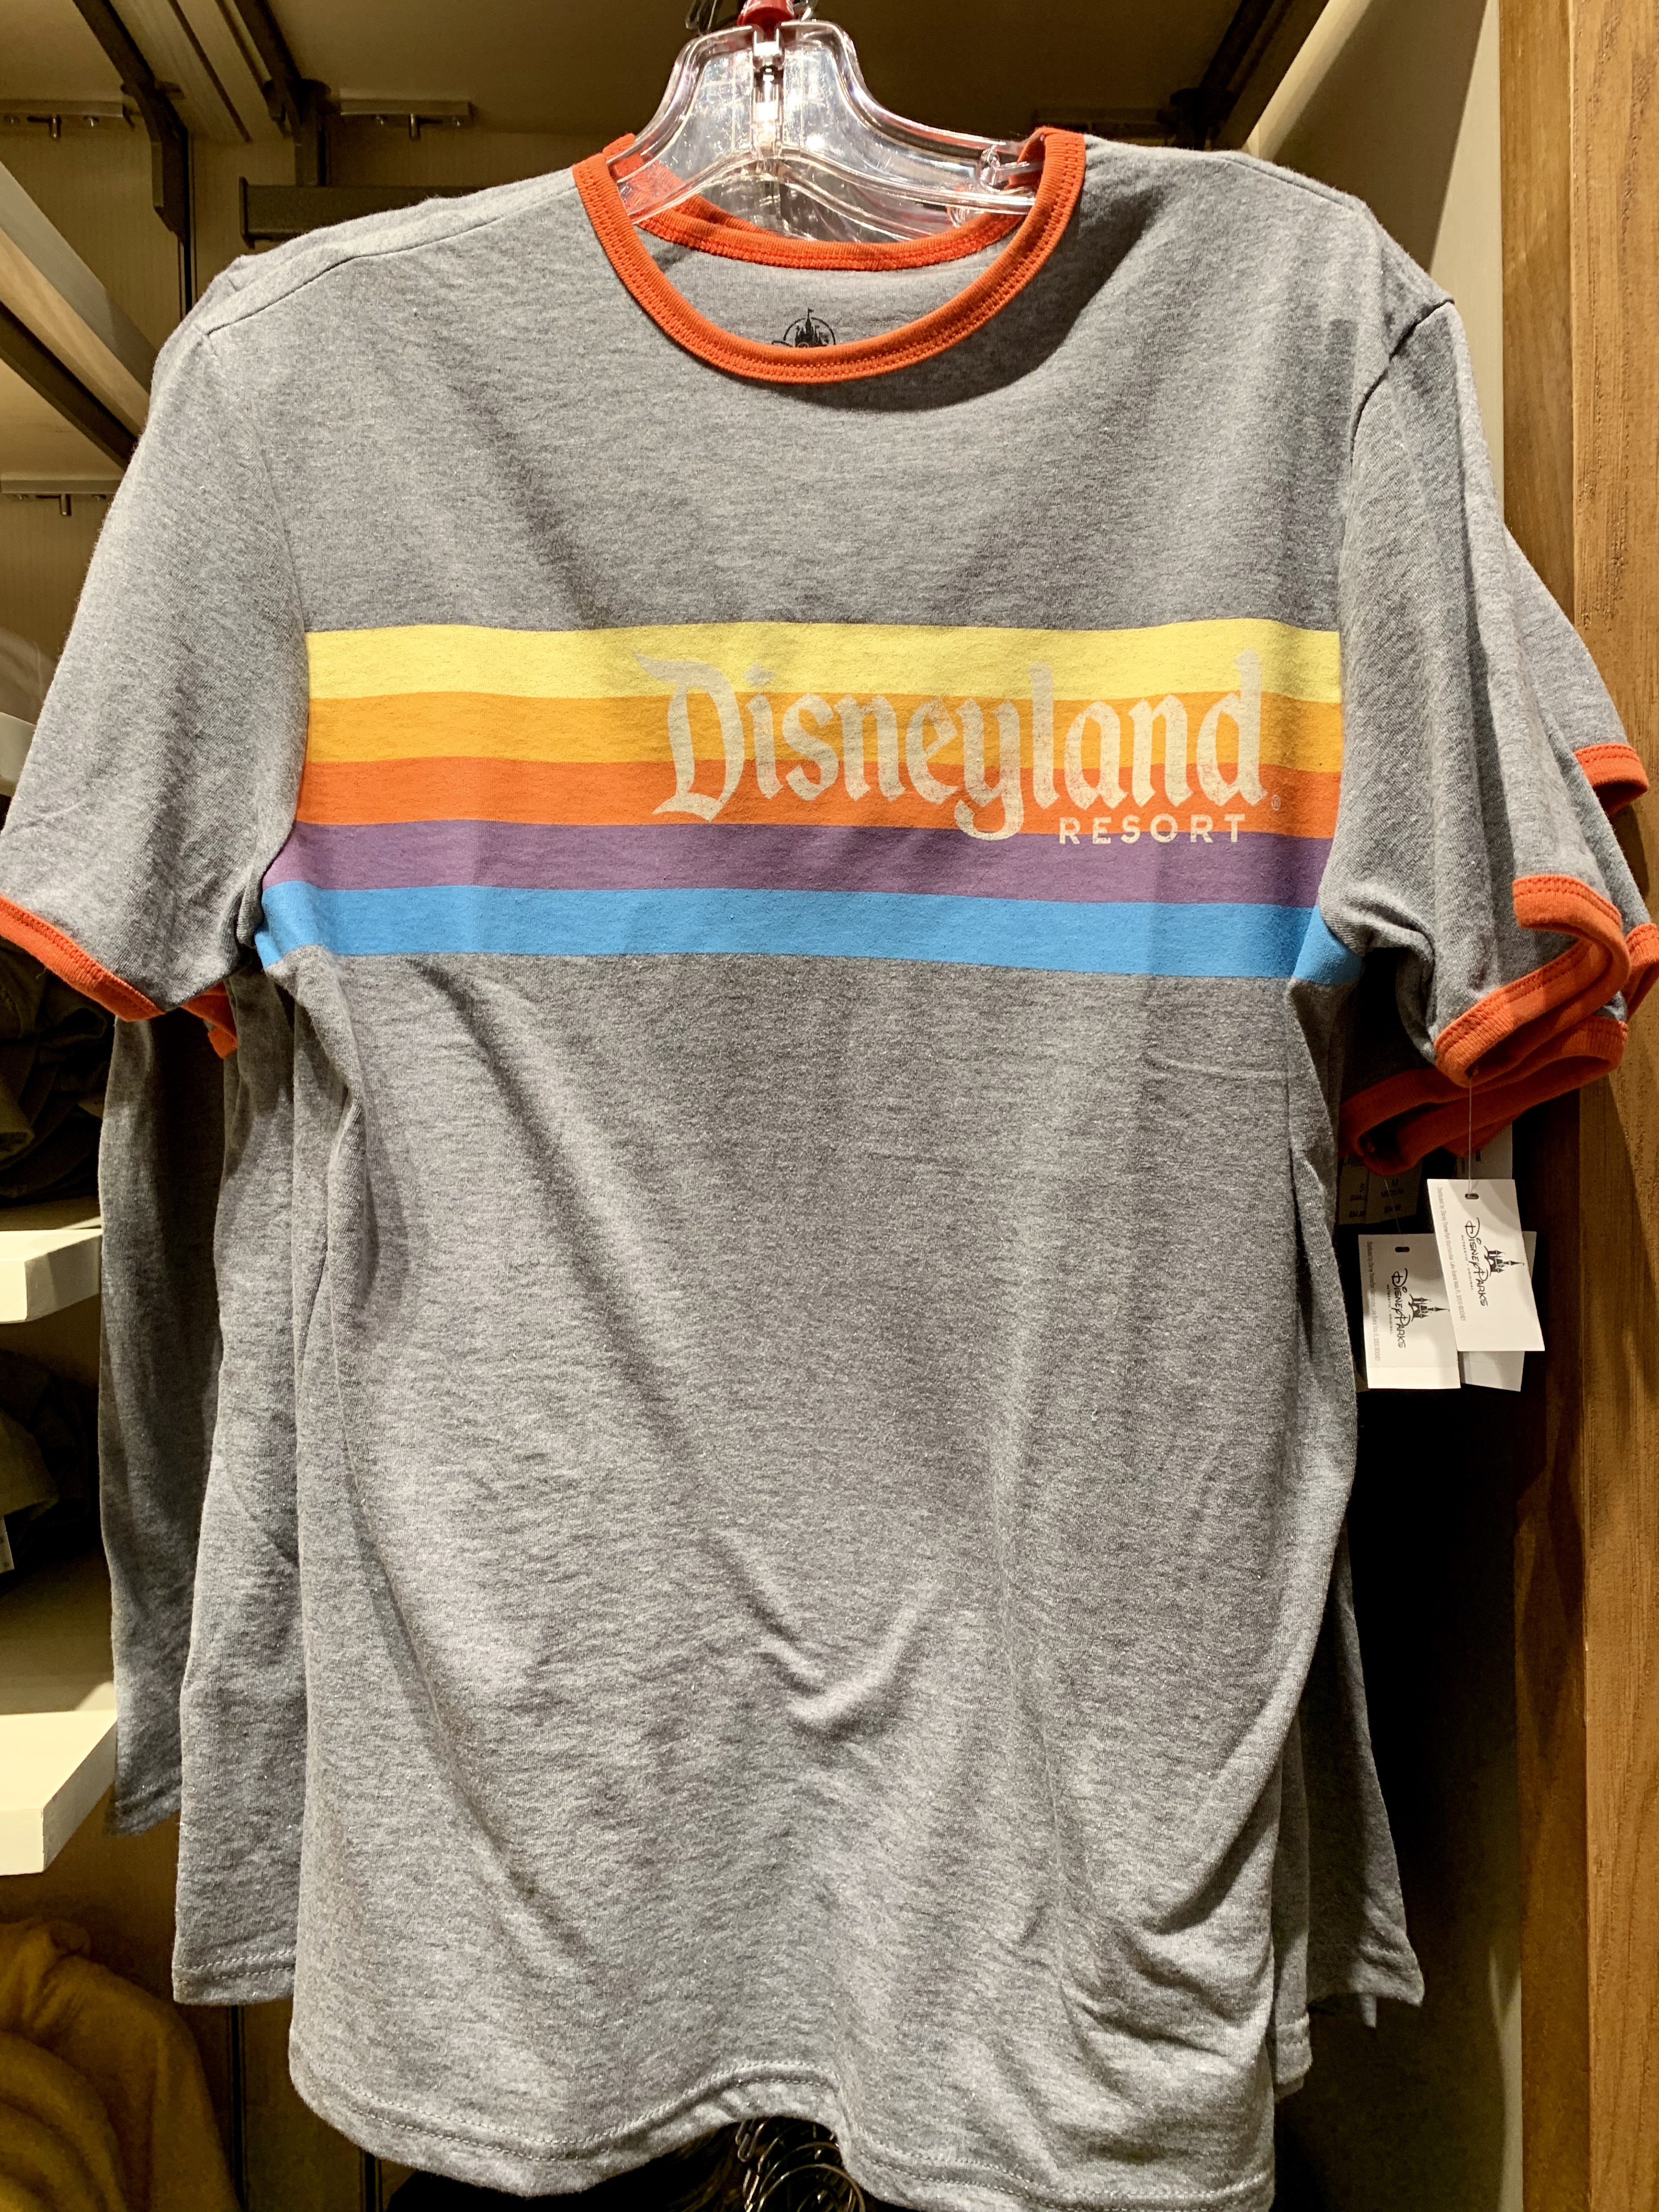 Disneyland Retro-Inspired Rainbow Apparel at Disneyland Resort